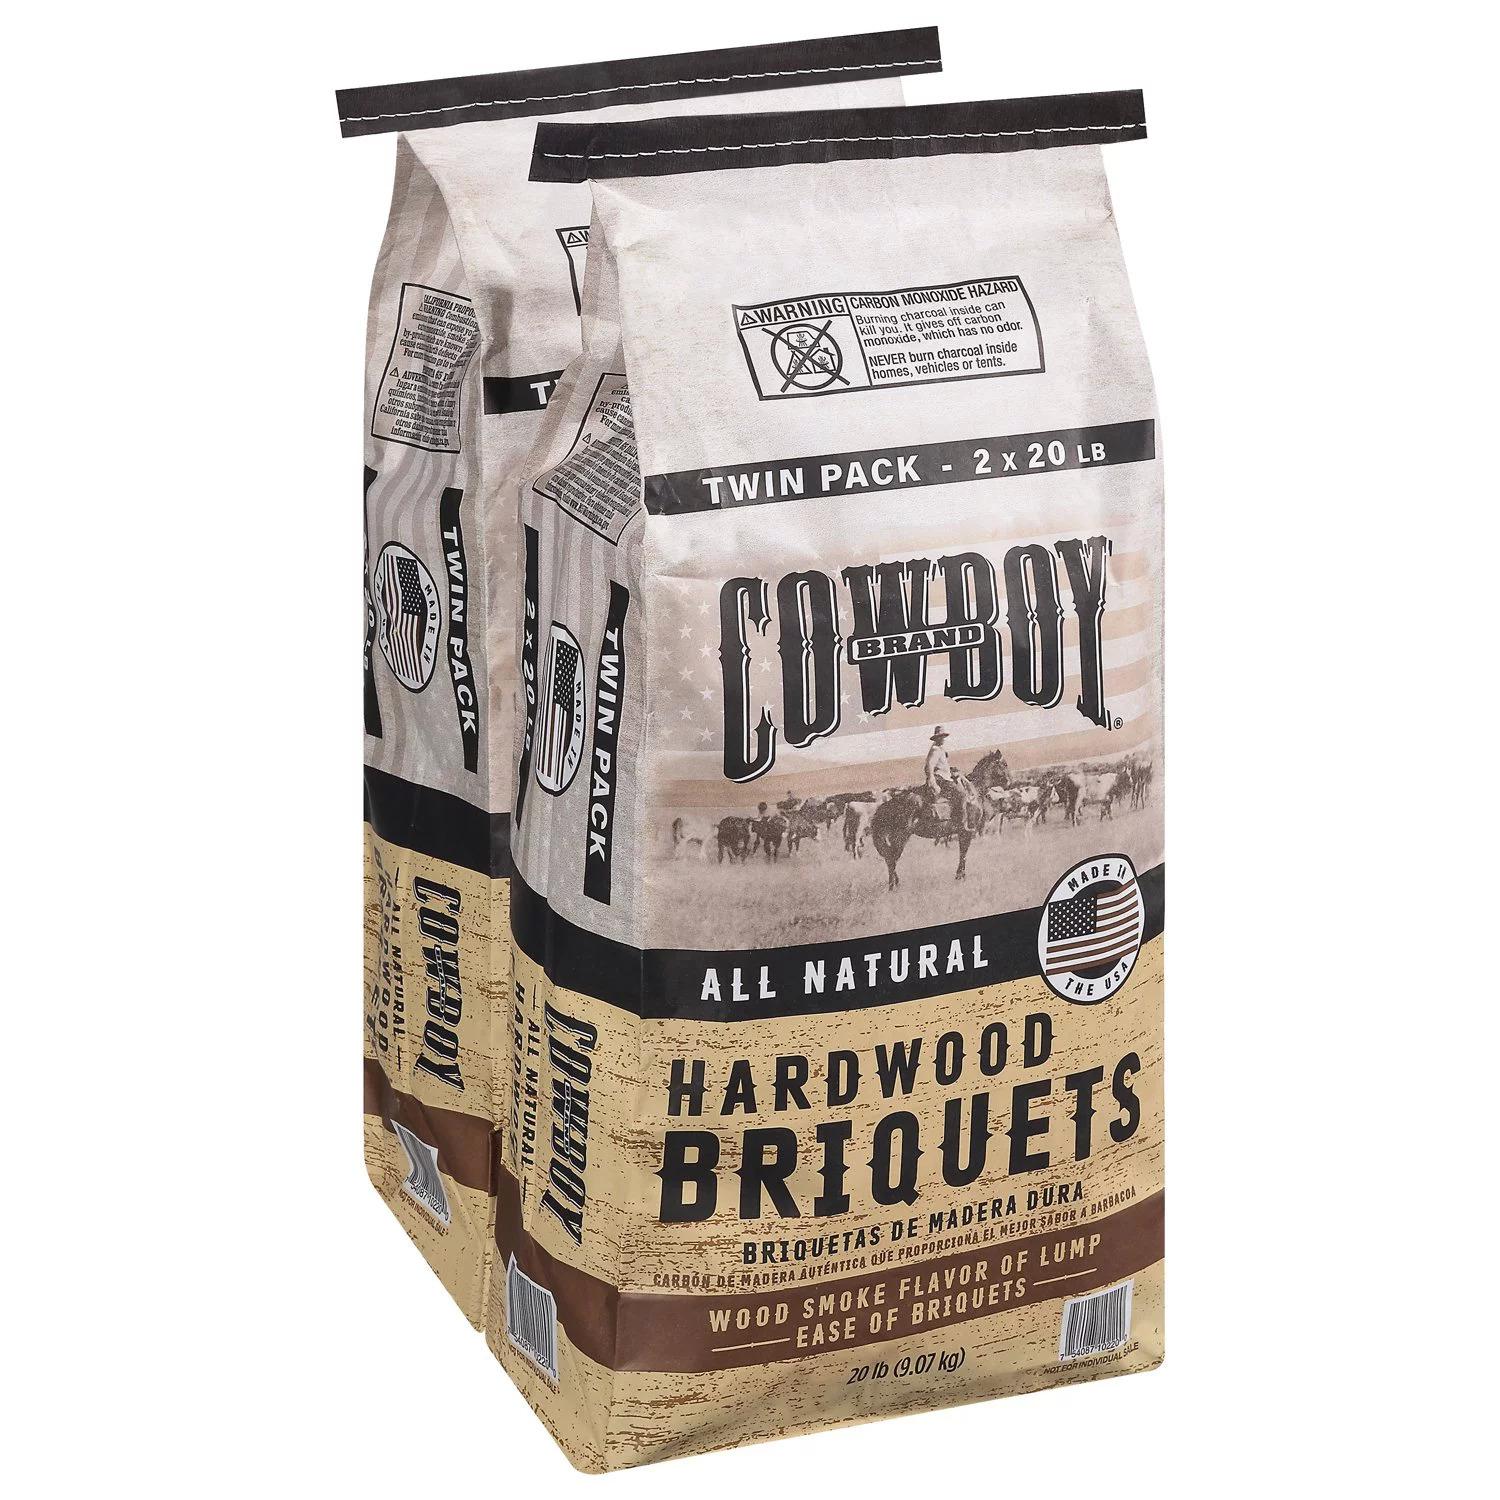 Cowboy Hardwood Charcoal Briquets 40Lbs for $17.92